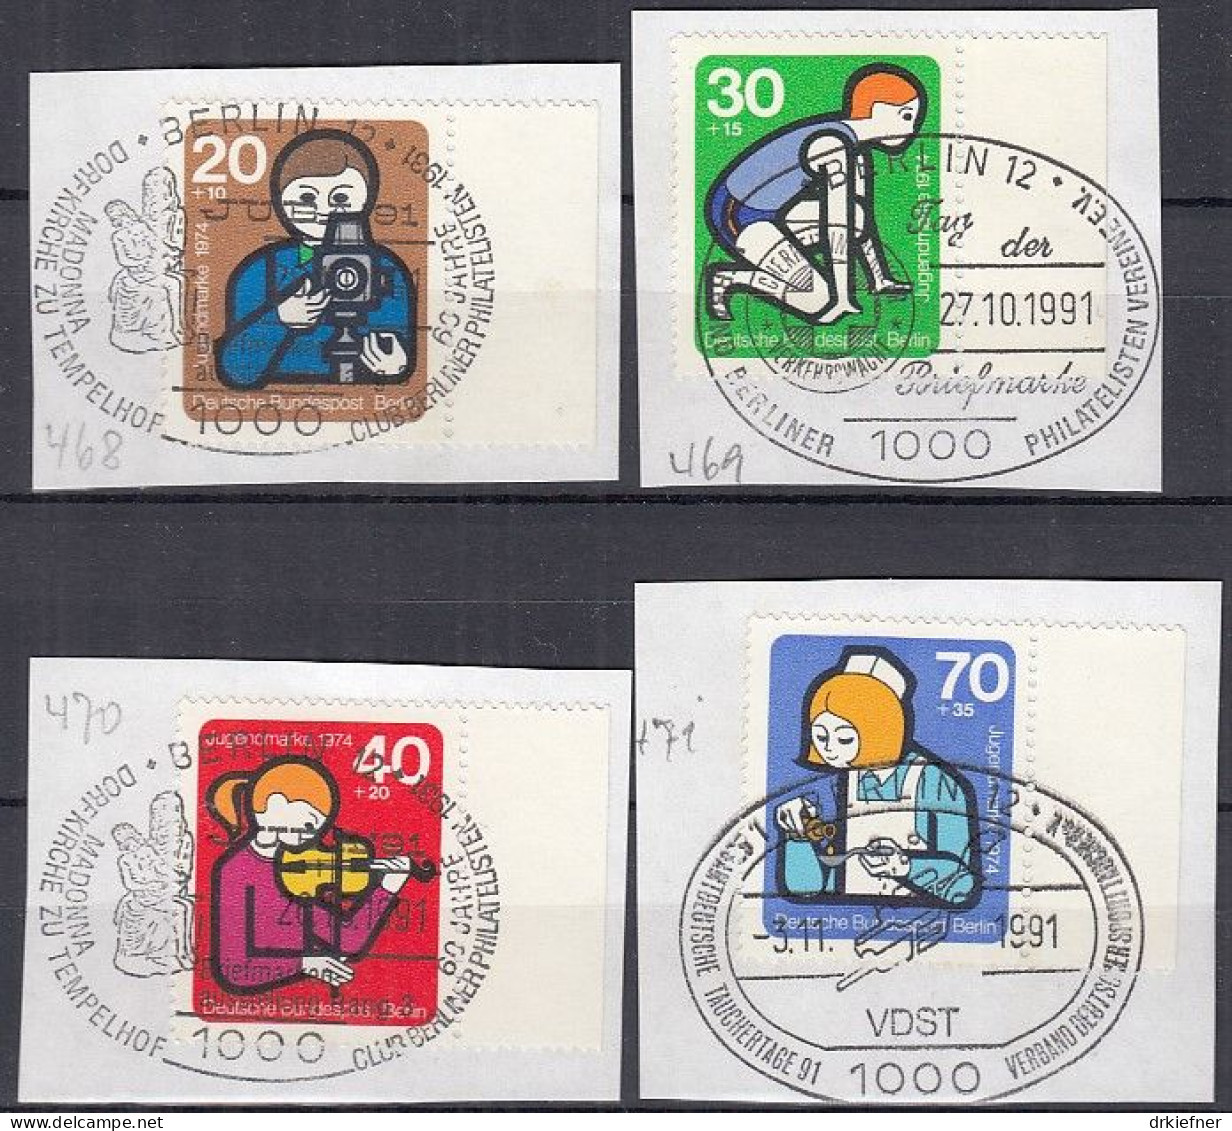 BERLIN  468-471, Gestempelt Auf Briefstück, SoSt., Int. Jugendarbeit, 1974 - Used Stamps